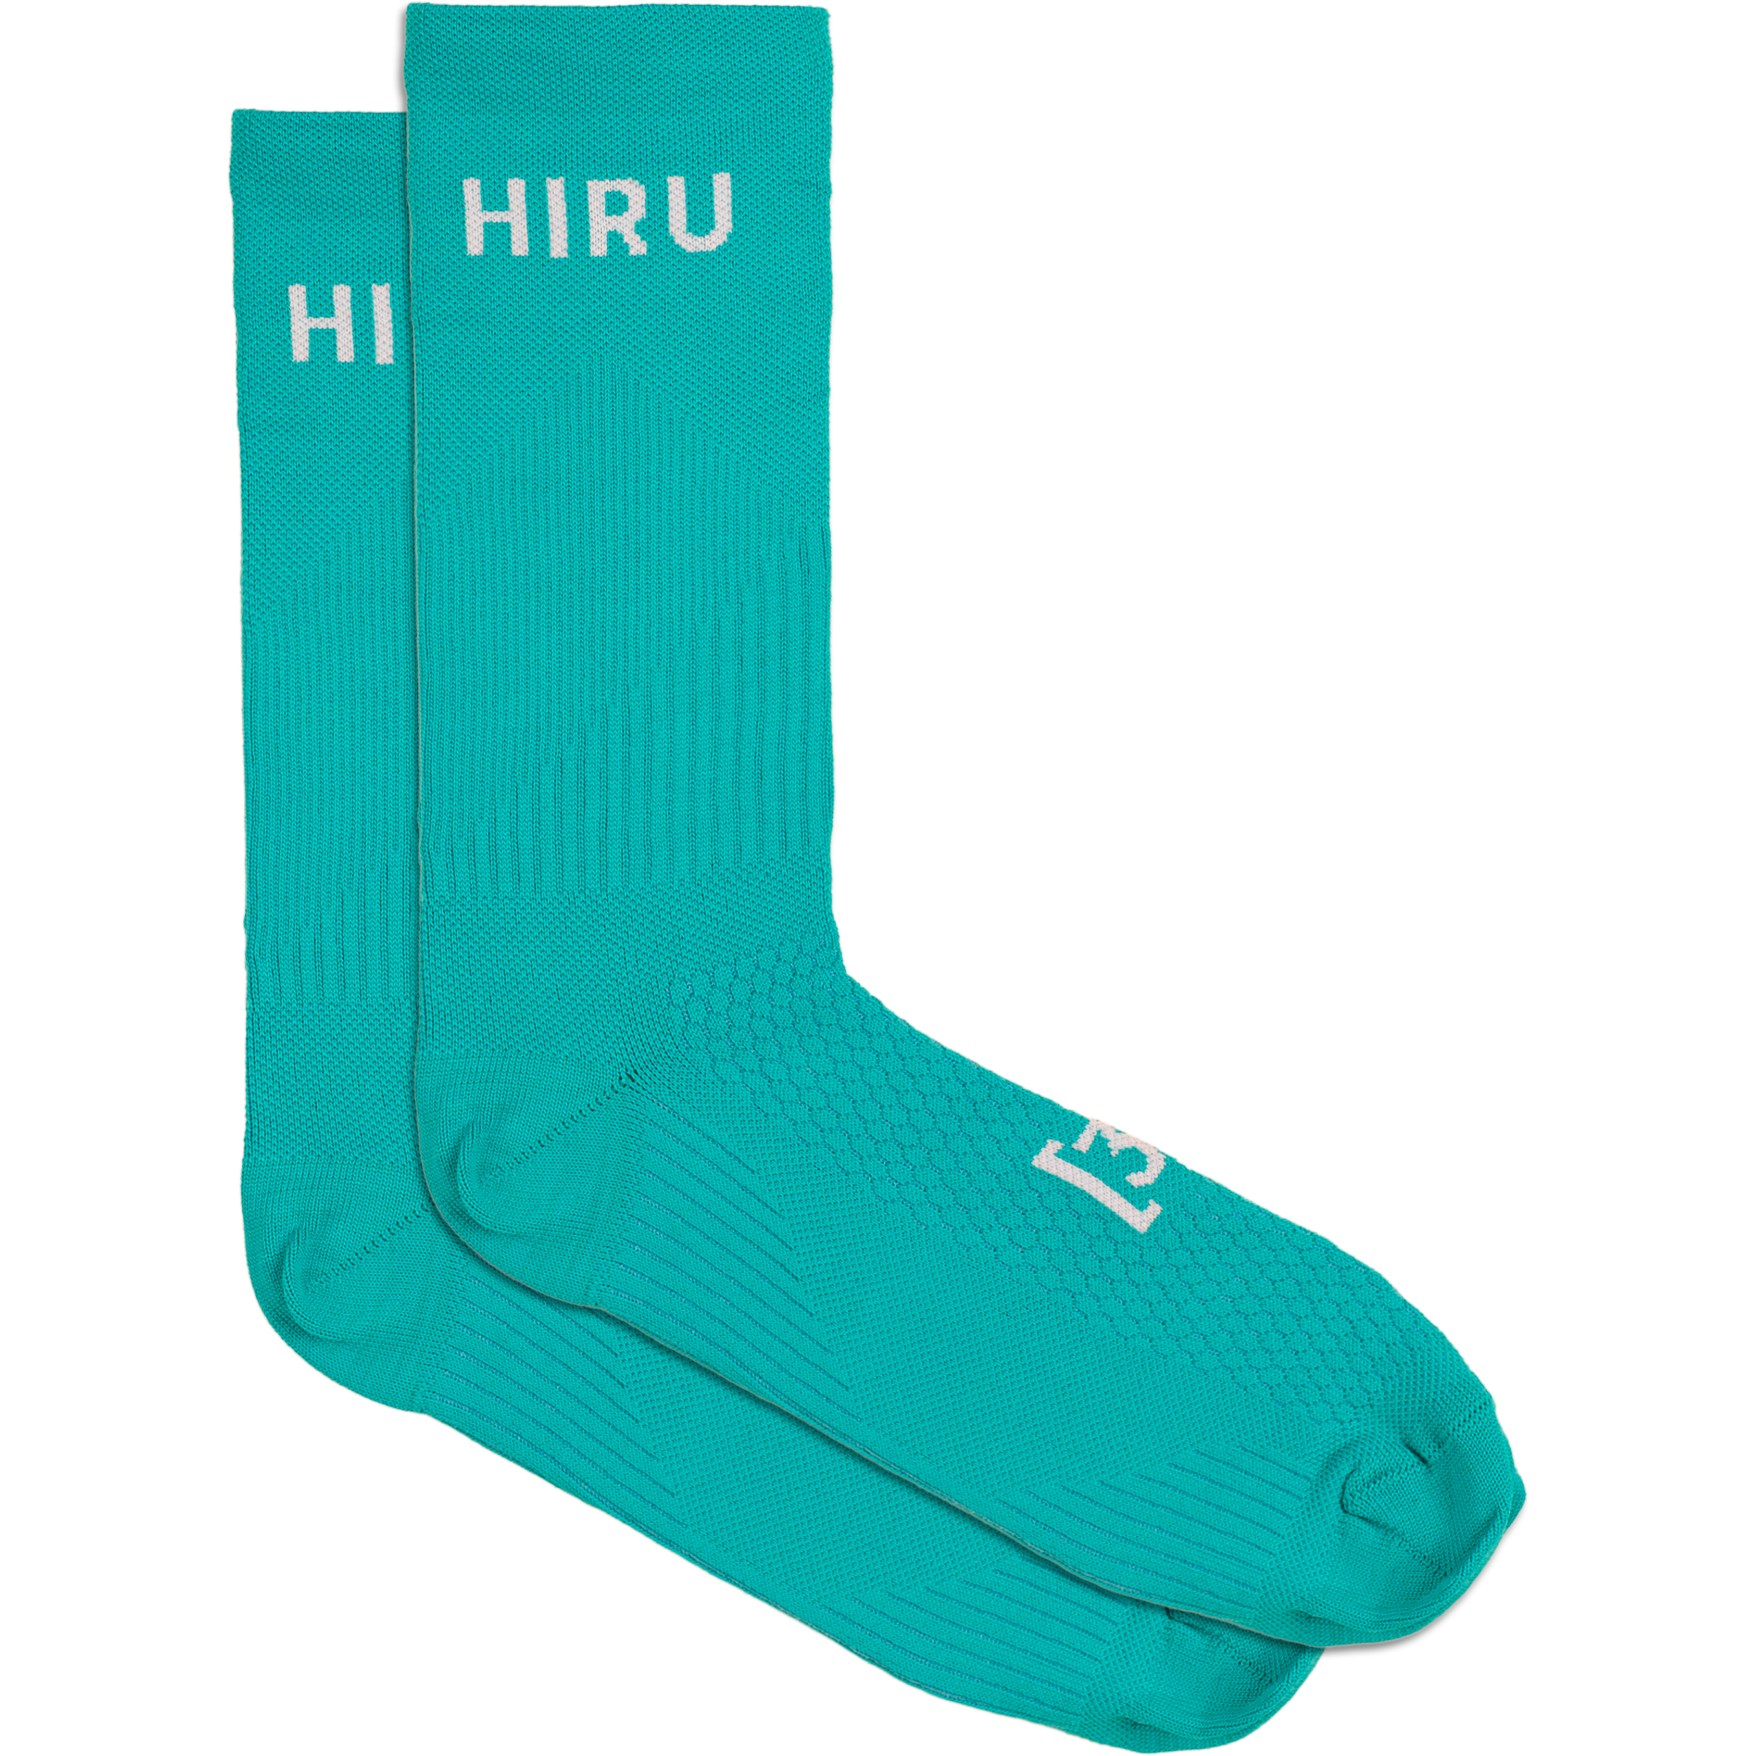 Image of Hiru Qskin Socks - ocean green